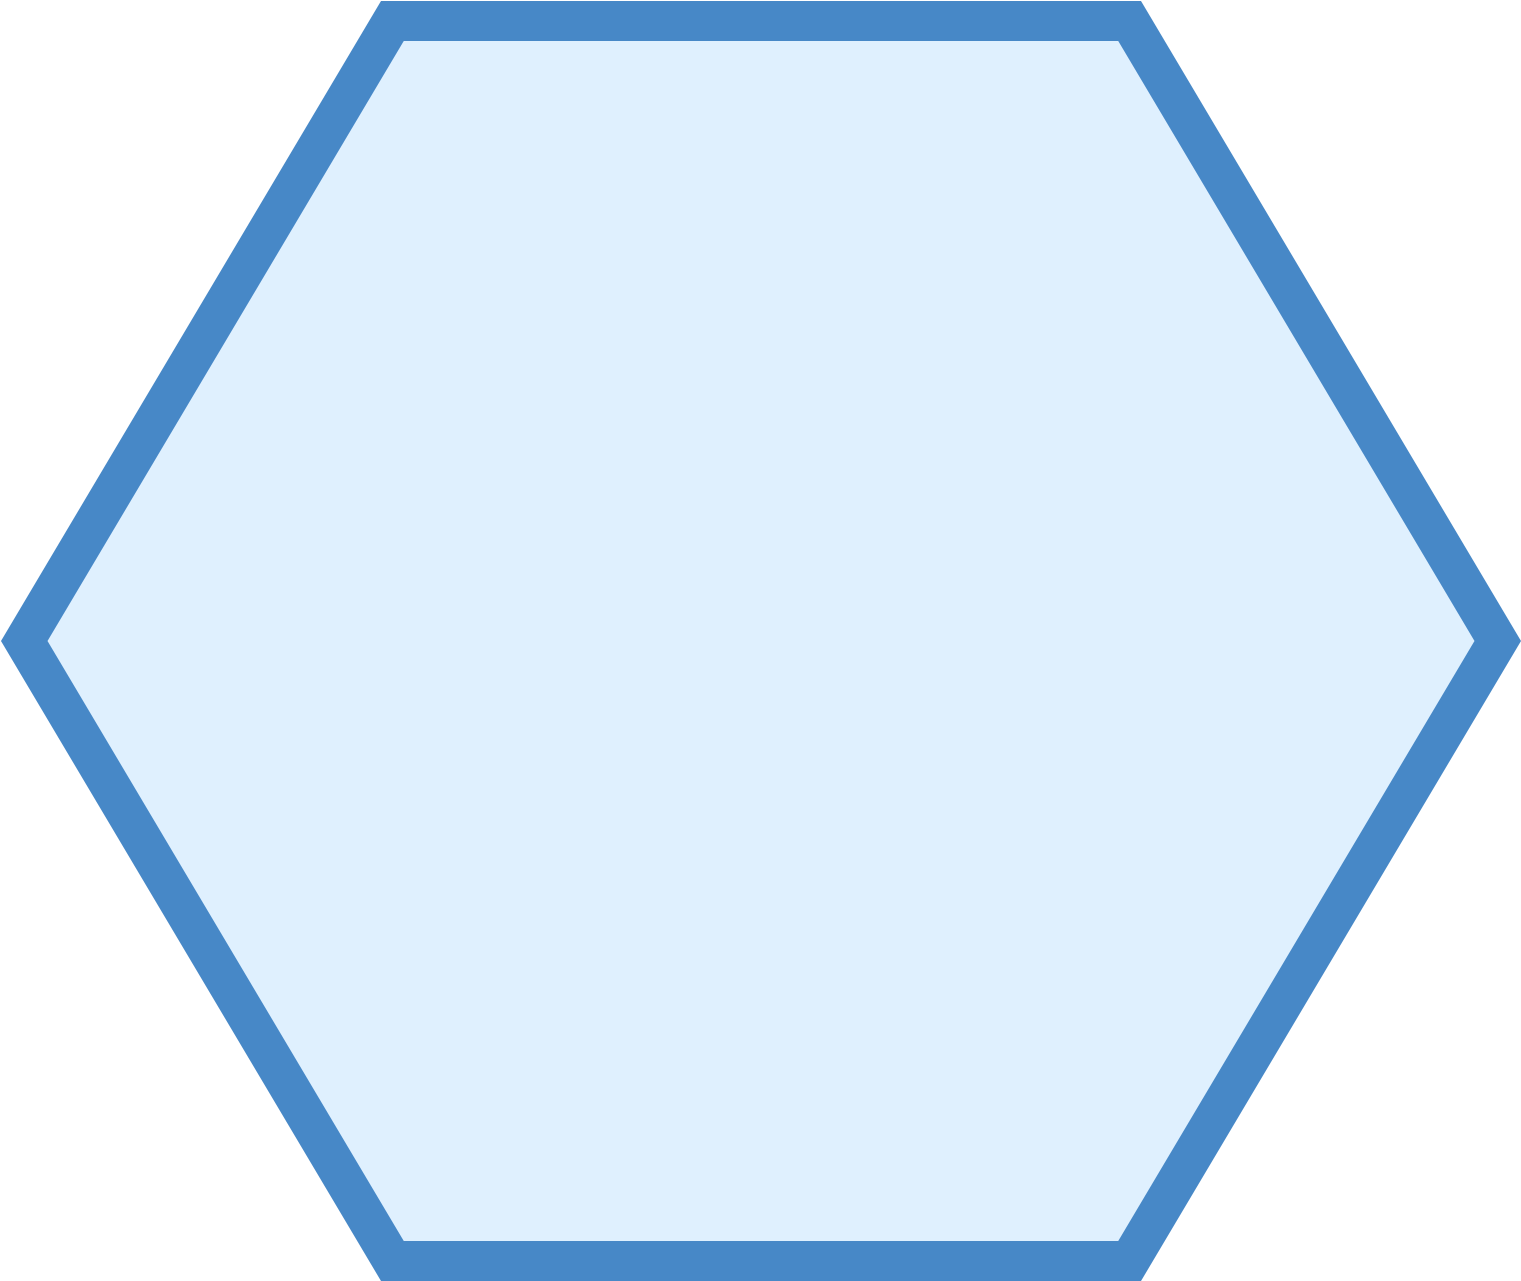 Blue Hexagon Shape PNG image